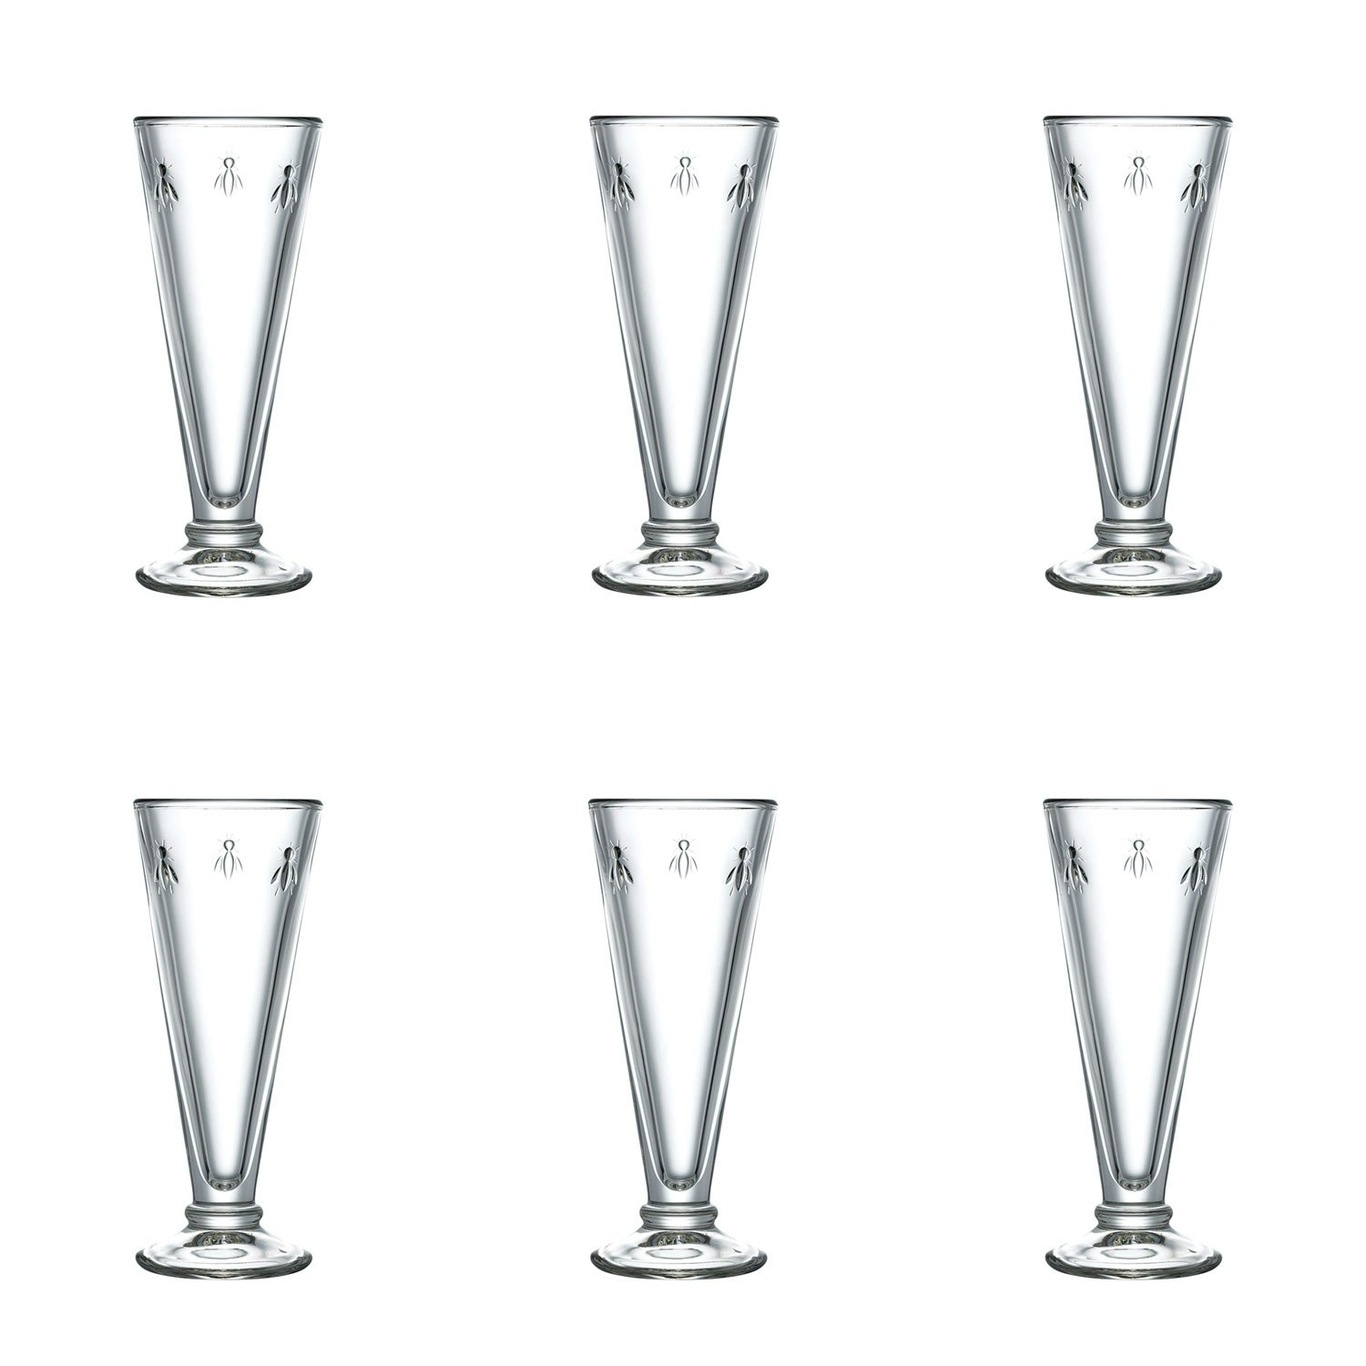 https://royaldesign.com/image/2/la-rochere-abeille-champagne-glass-15-cl-6-pack-0?w=800&quality=80